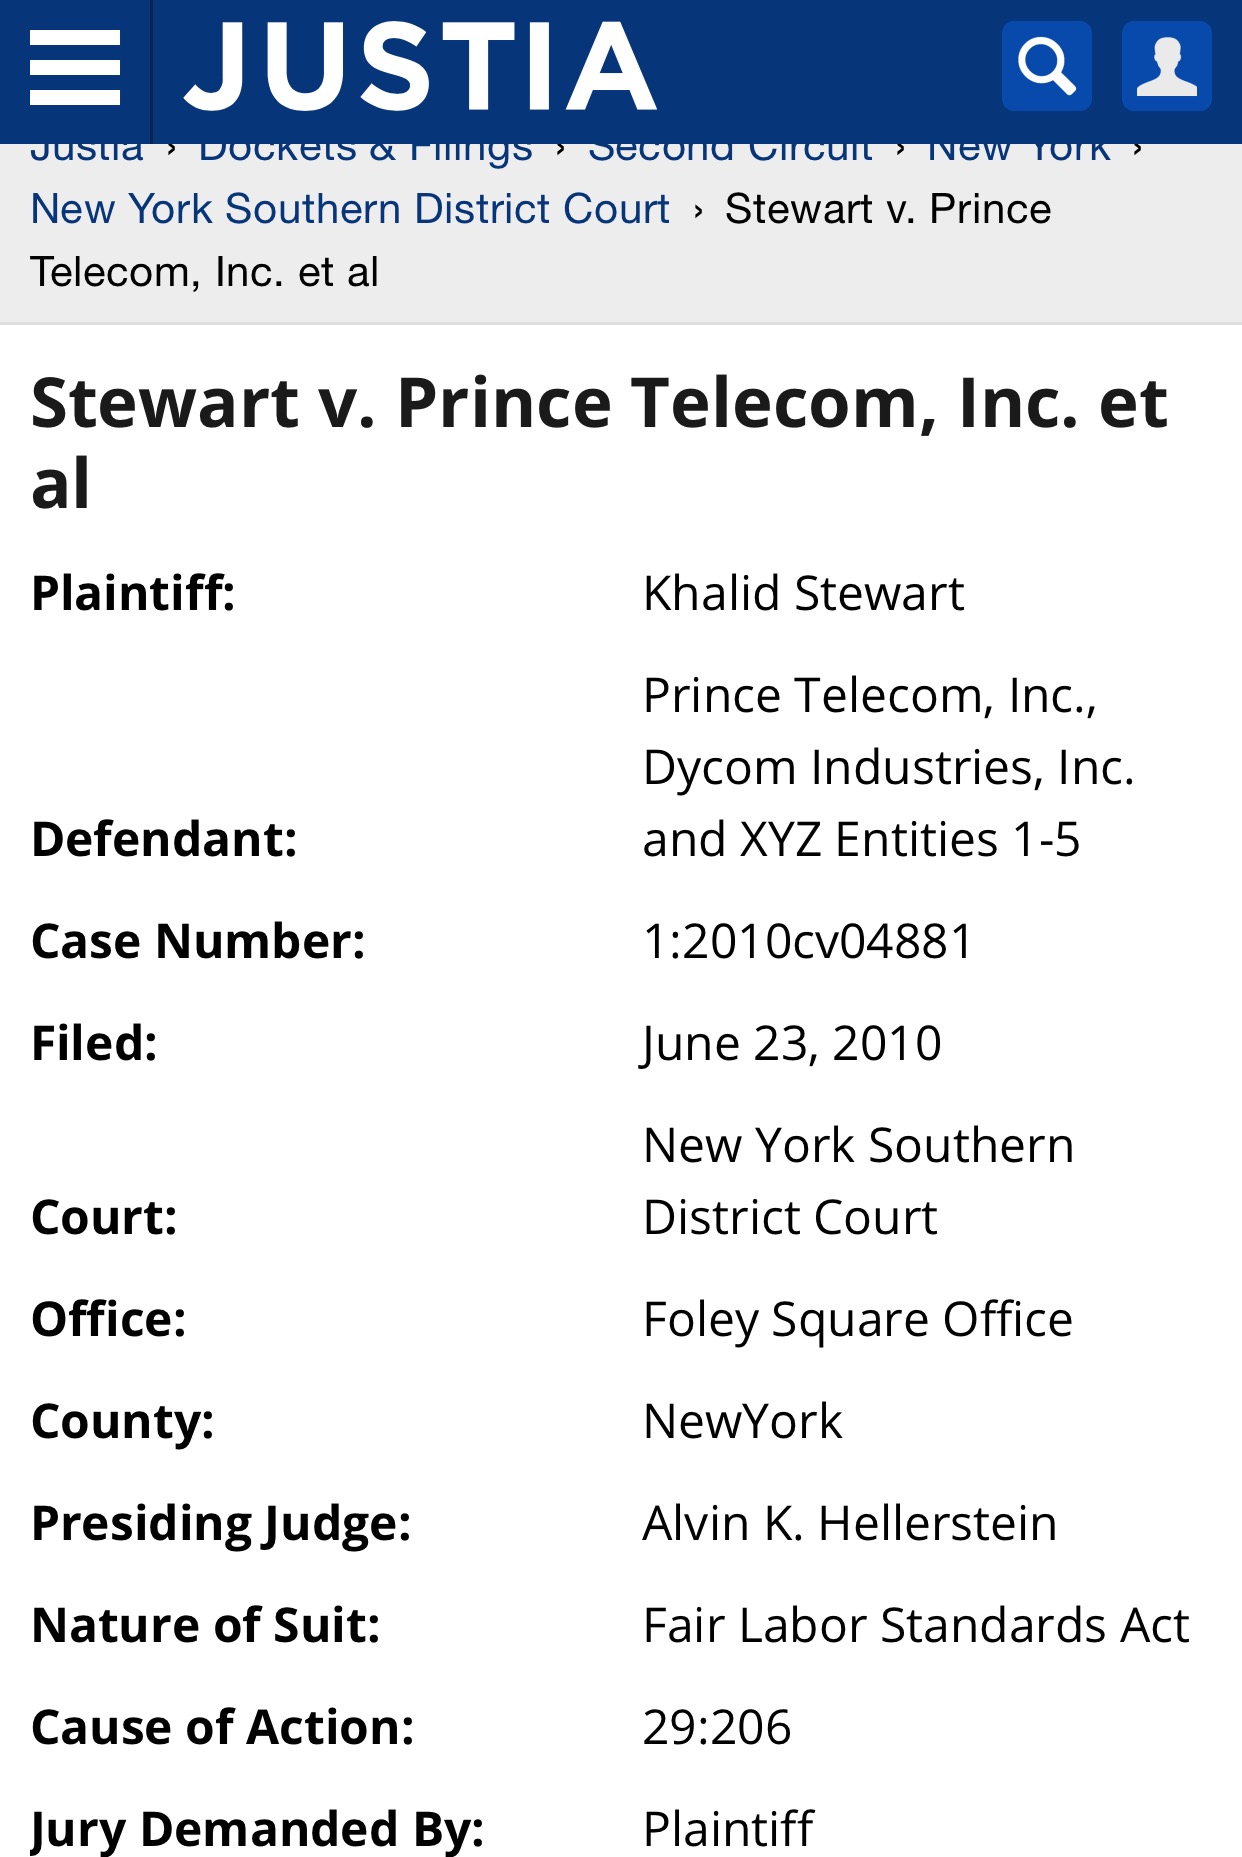 Stewart V Prince Telecom Discrimination lawsuit https://dockets.justia.com/docket/new-york/nysdce/1:2010cv04881/364640